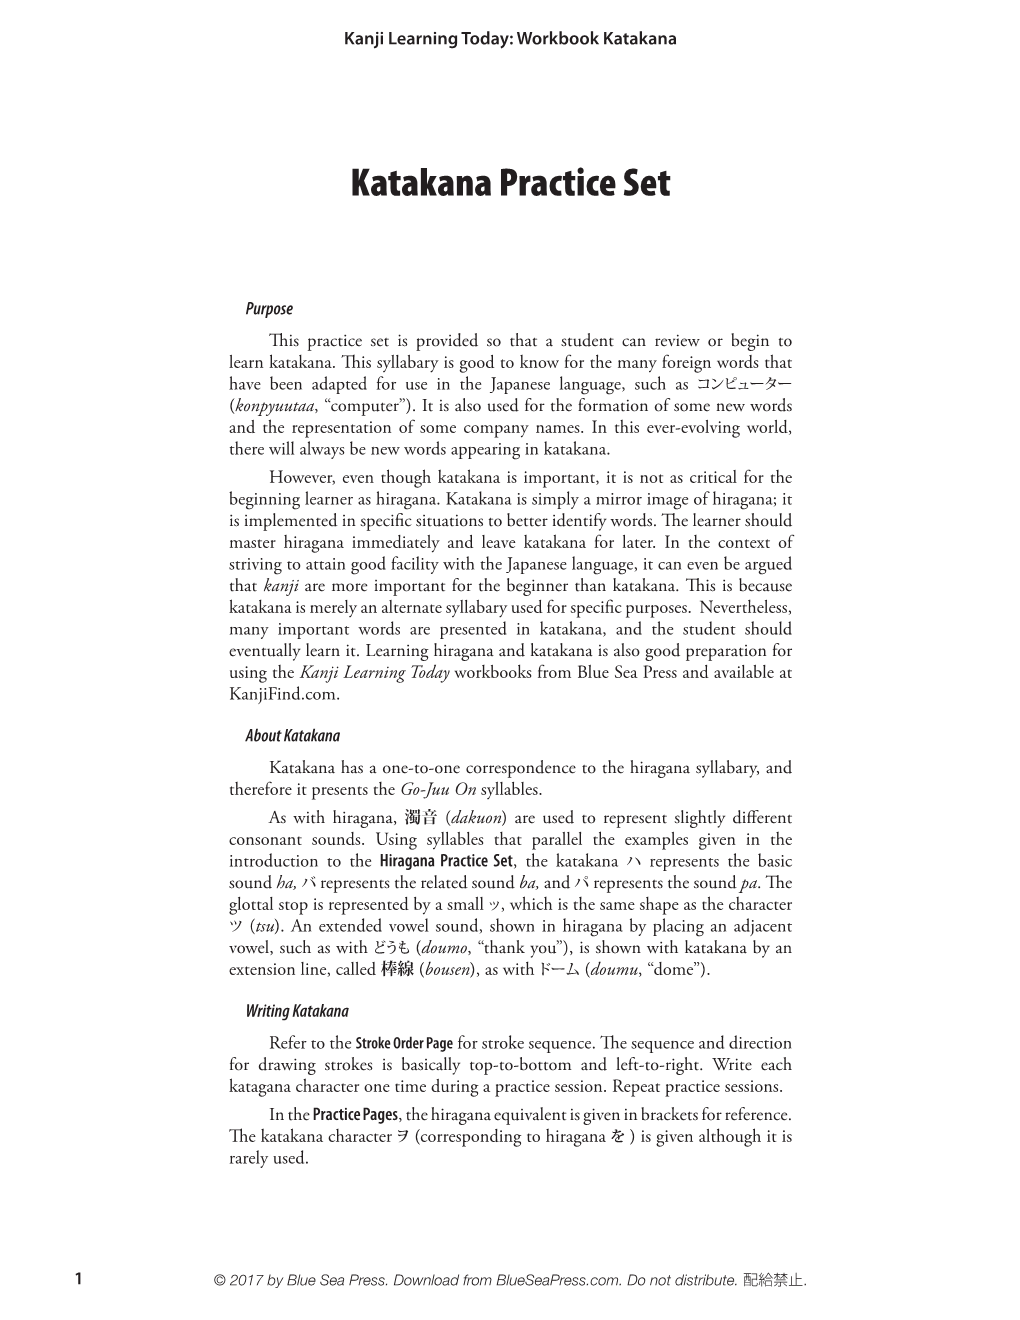 Katakana Practice Set